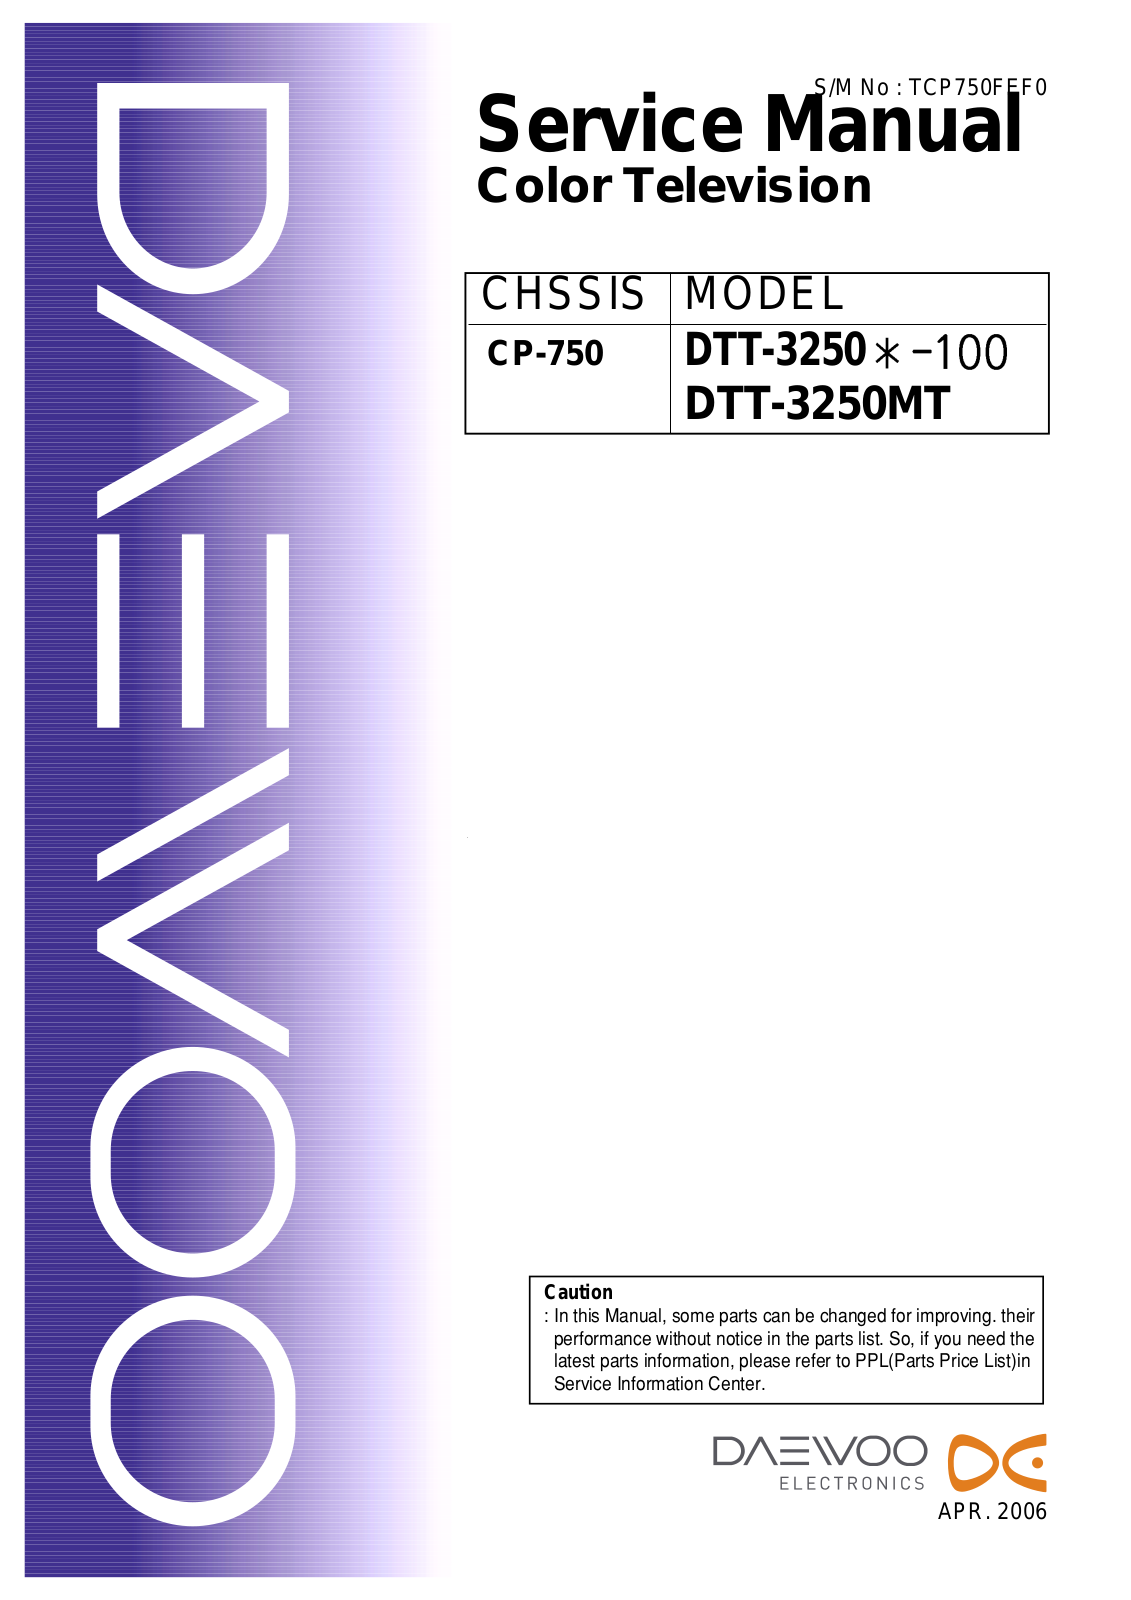 Daewoo CP-750 Service Manual